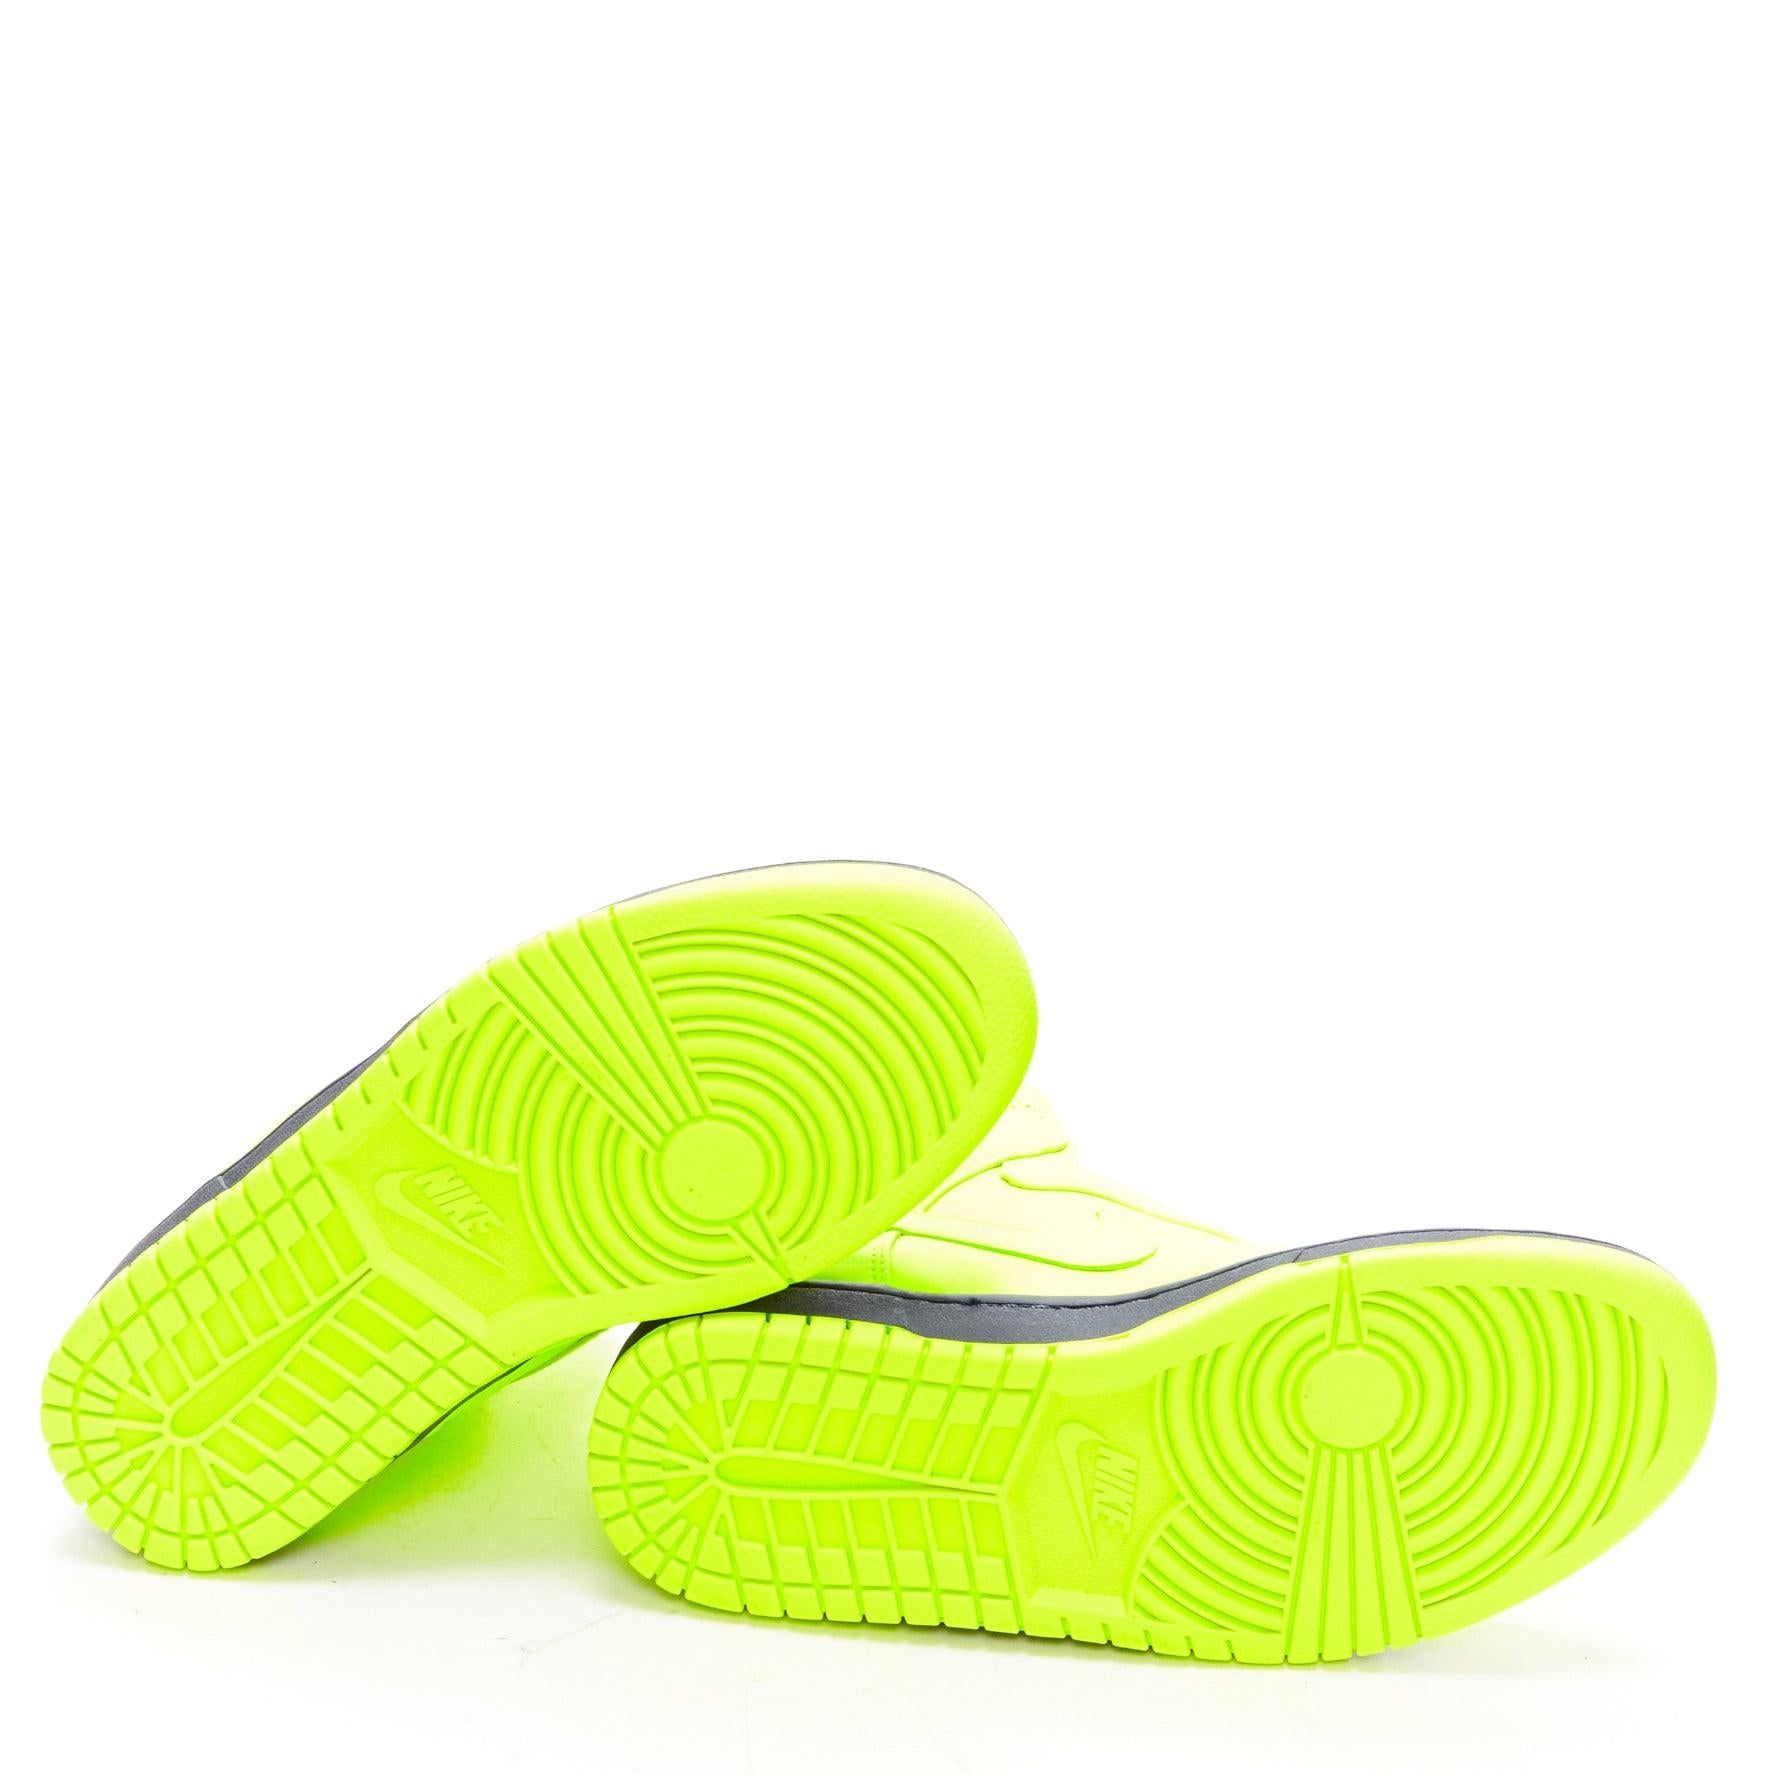 SACAI NIKE NIKELAB Dunk Lux SP Volt neon yellow high top sneakers US8 EU38 8